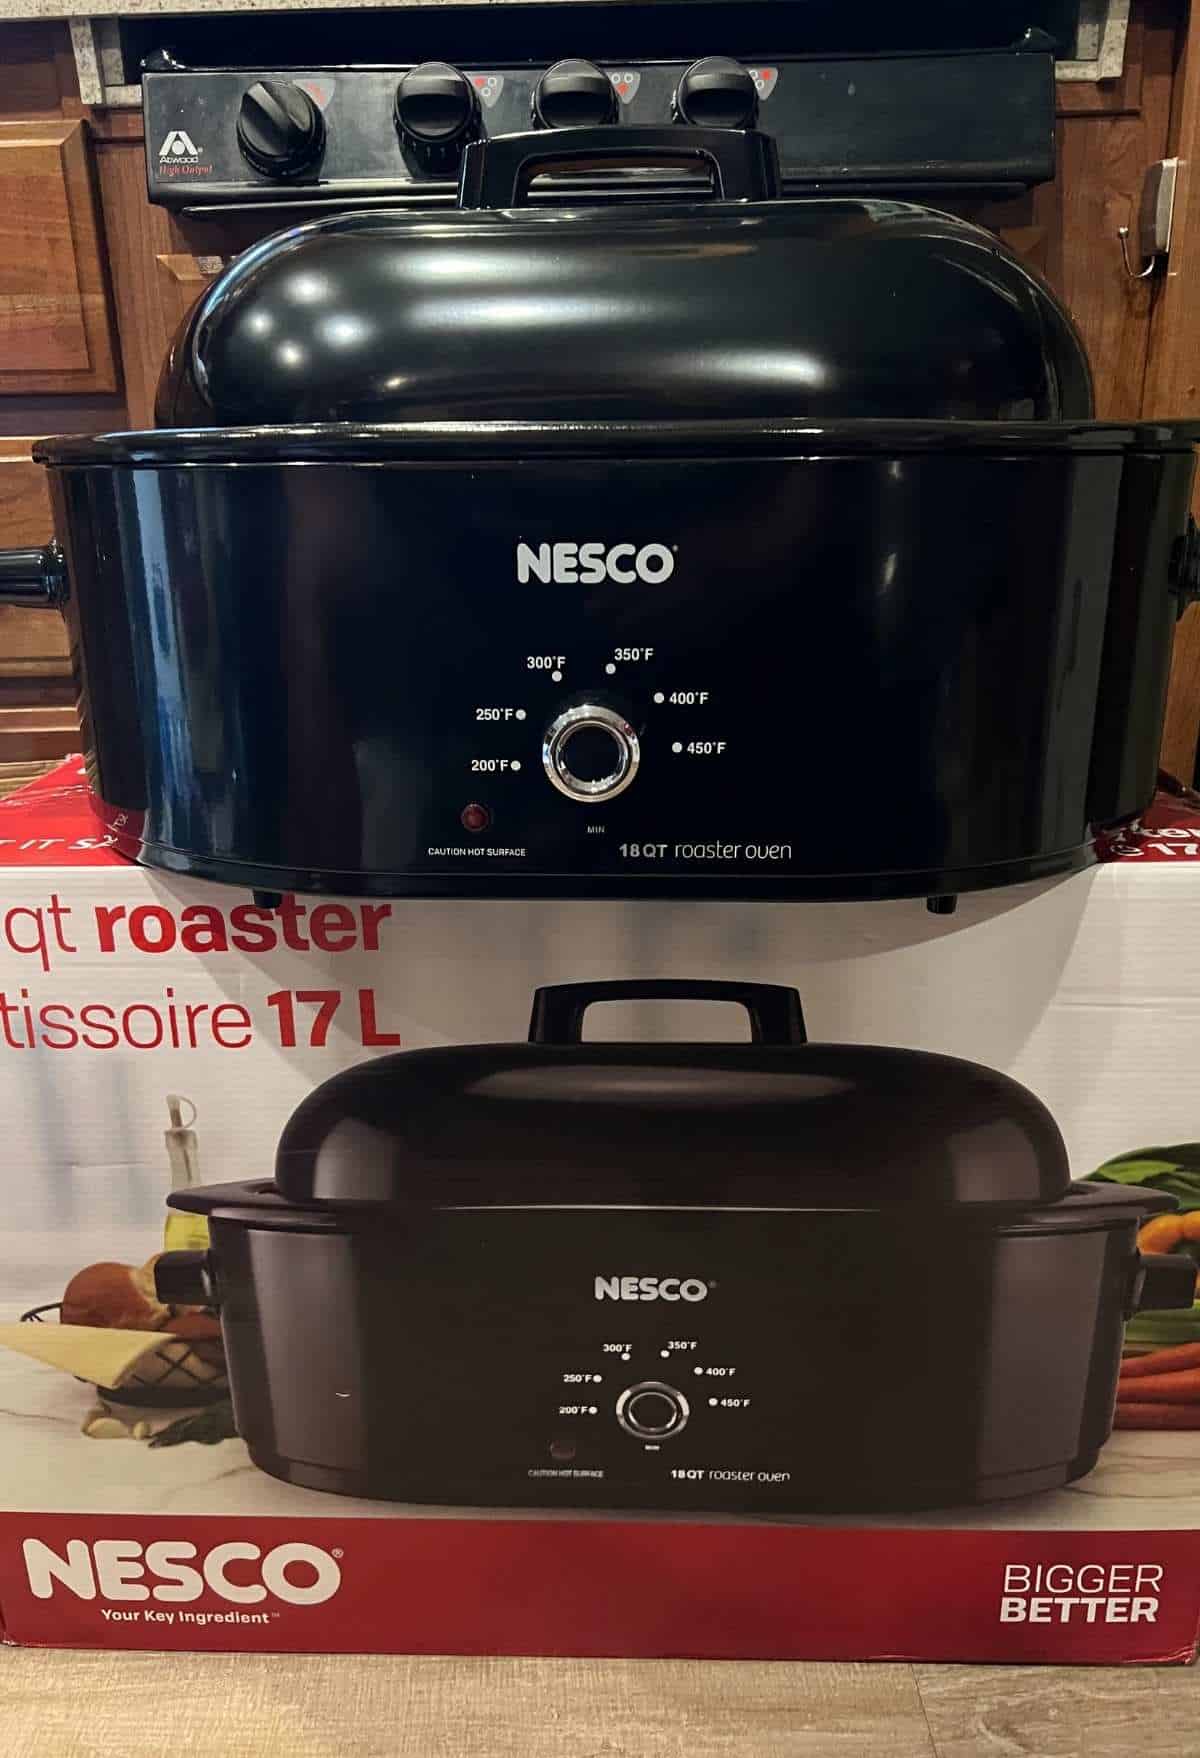 https://dinedreamdiscover.com/wp-content/uploads/2022/05/Nesco-Electric-Roaster-Oven.jpg